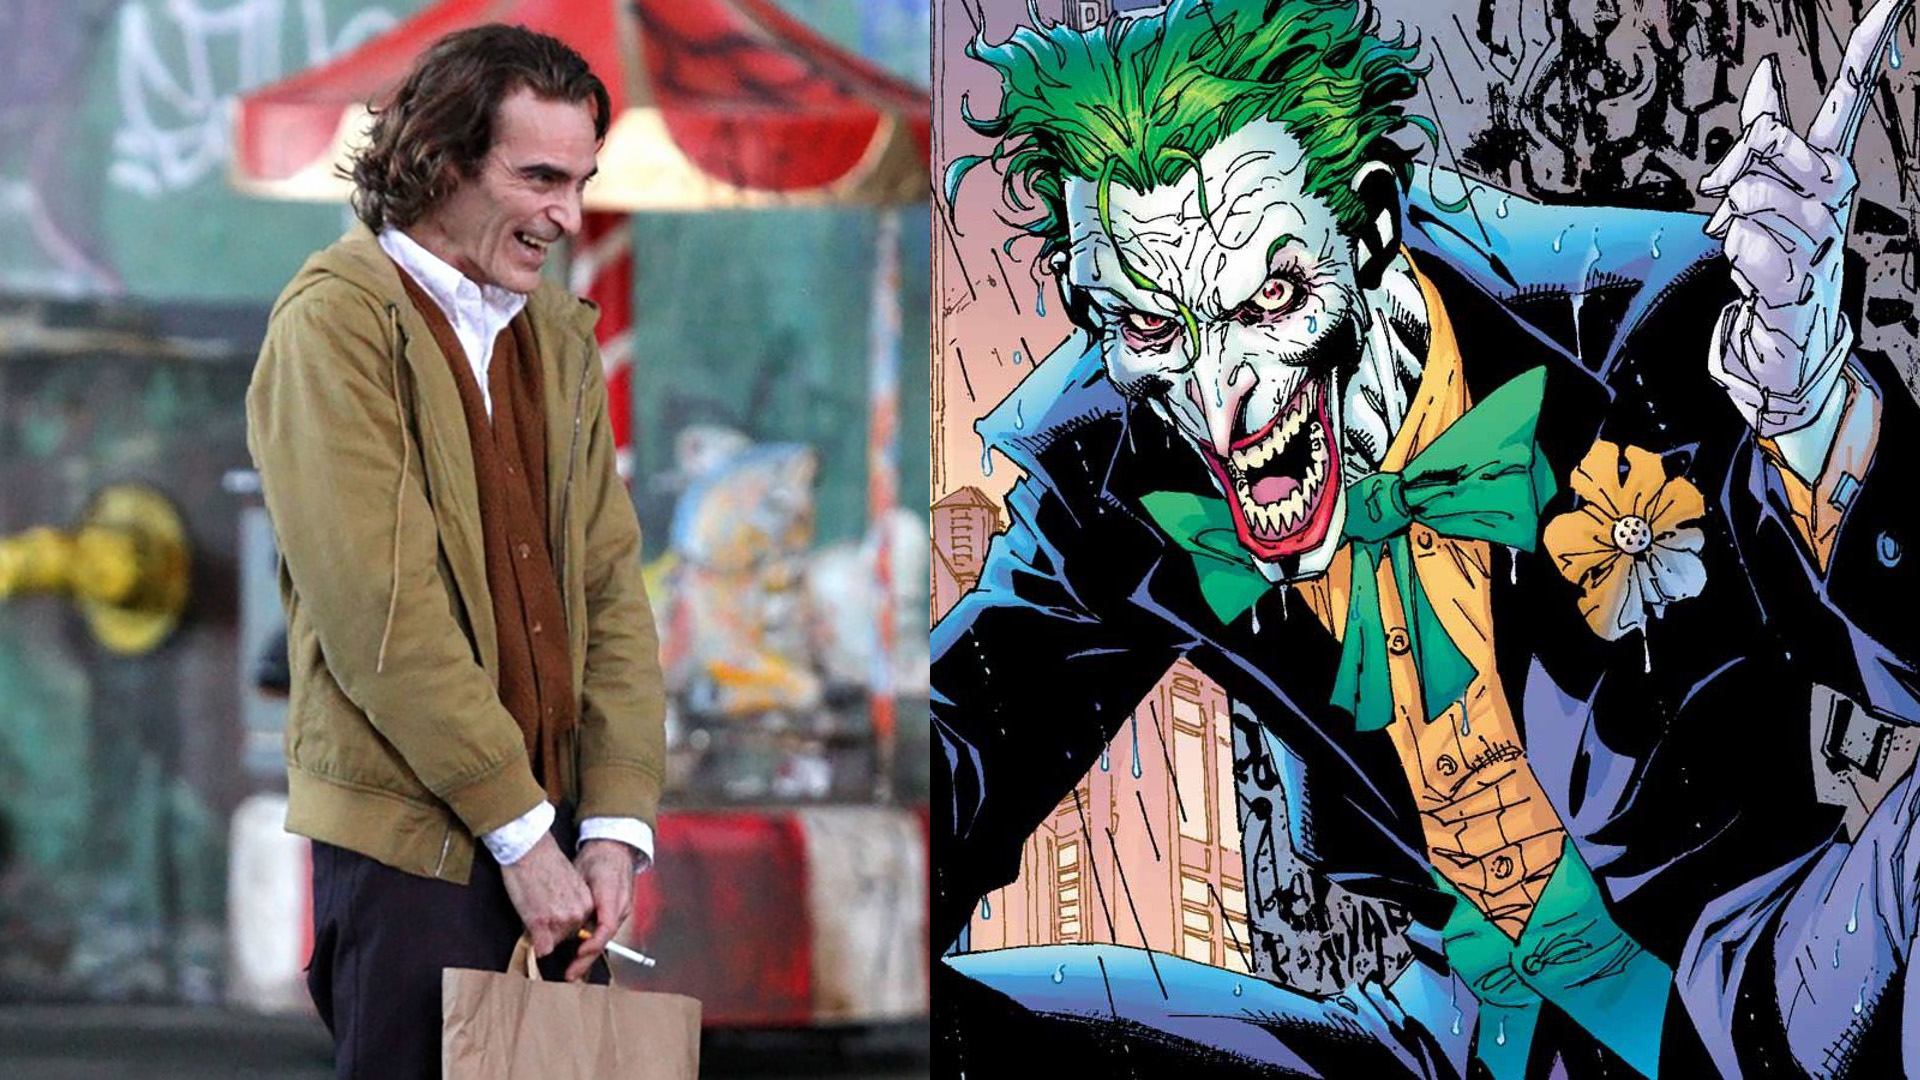 Warner Bros. Announces Official ‘Joker’ Movie Cast and Plot